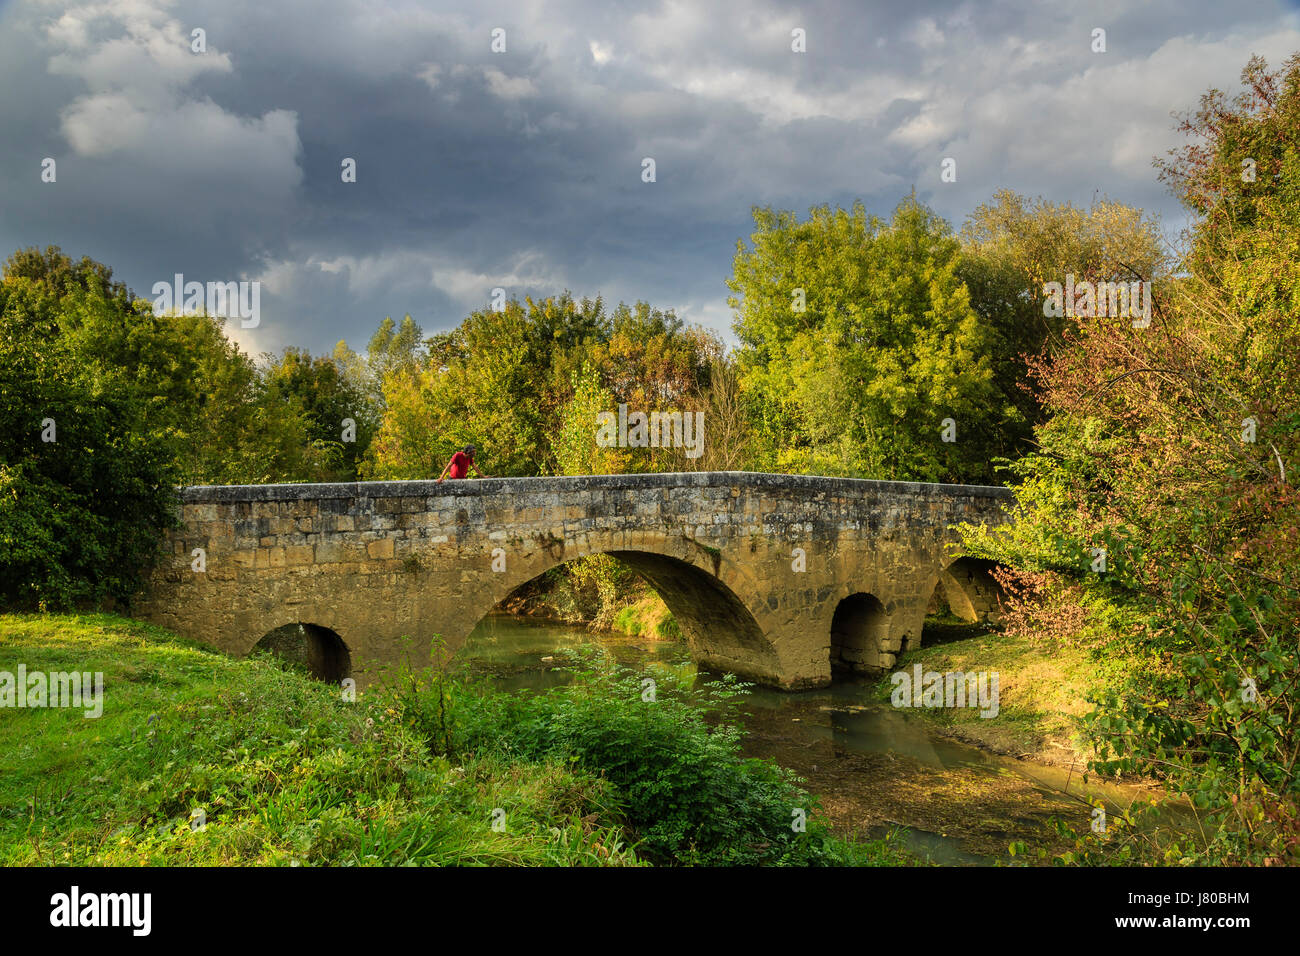 Frankreich, Gers, Beaumont oder Beaumont-Sur-l'Osse, Artigue Brücke Weltkulturerbe von der UNESCO für den Weg nach Saint-Jacques-de-Compostela Stockfoto